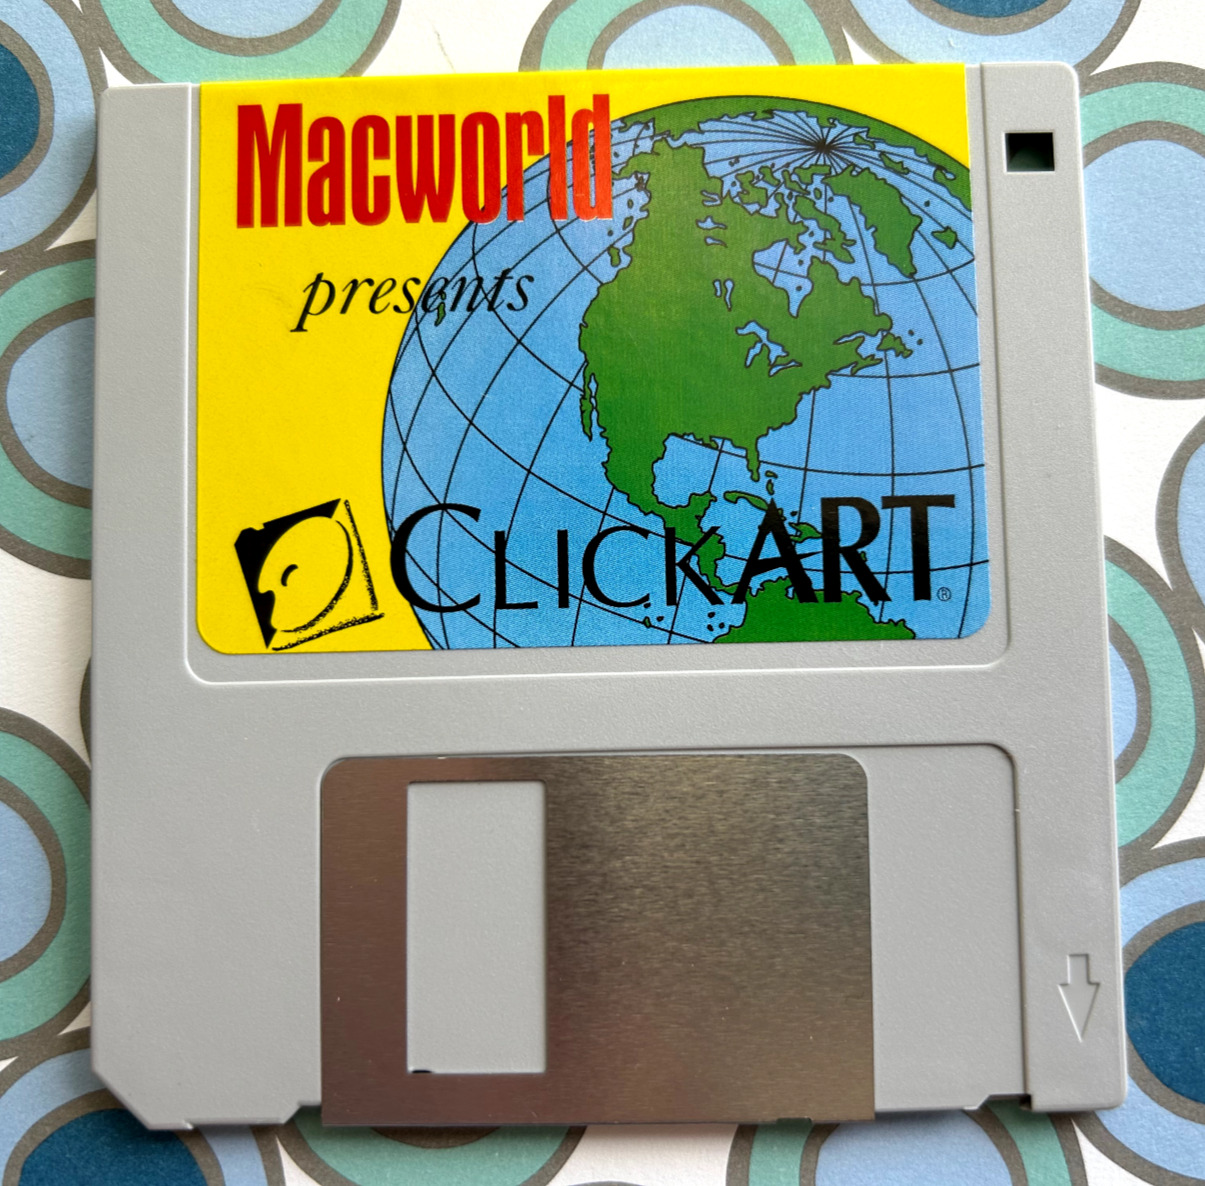 vtg '80s Macworld CLICKART floppy disk Mac OS computer software apple Macintosh